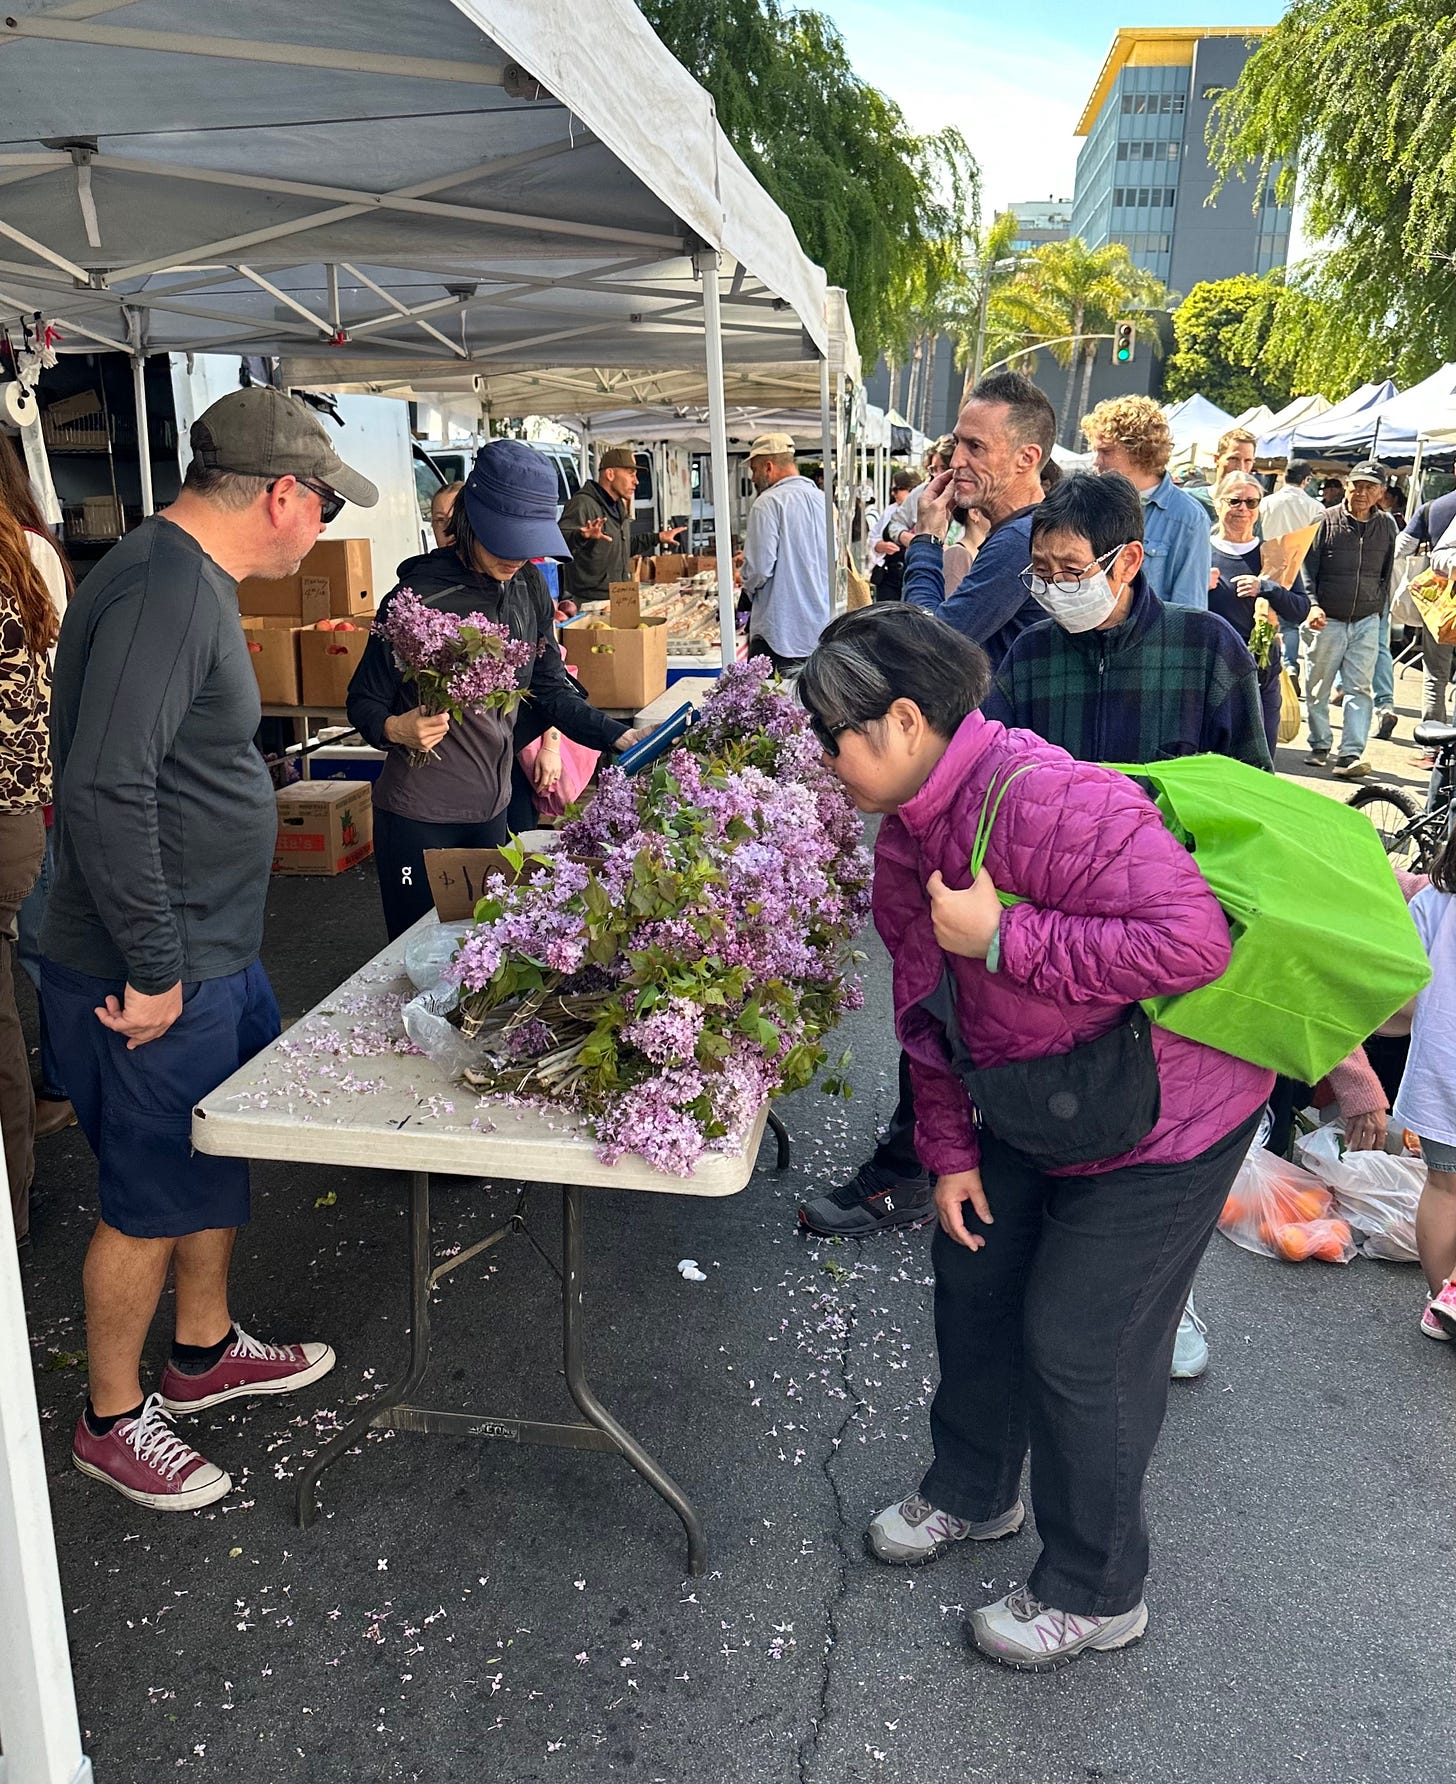 Lilacs at the Hollywood Farmers' Market